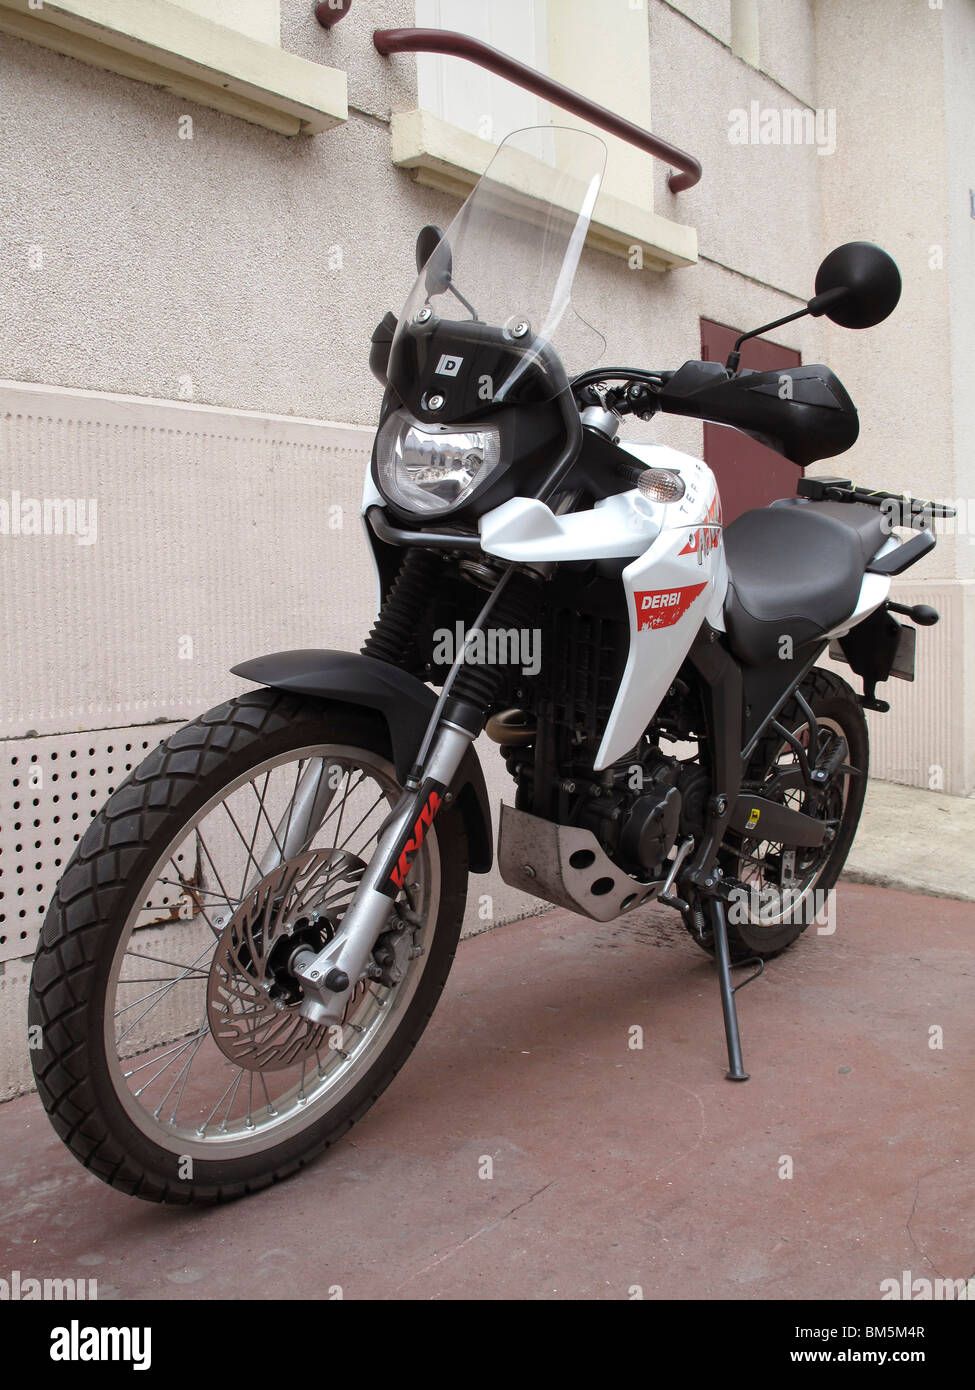 Derbi Terra,aventure,moto 125cc fabriqué en Espagne Photo Stock - Alamy